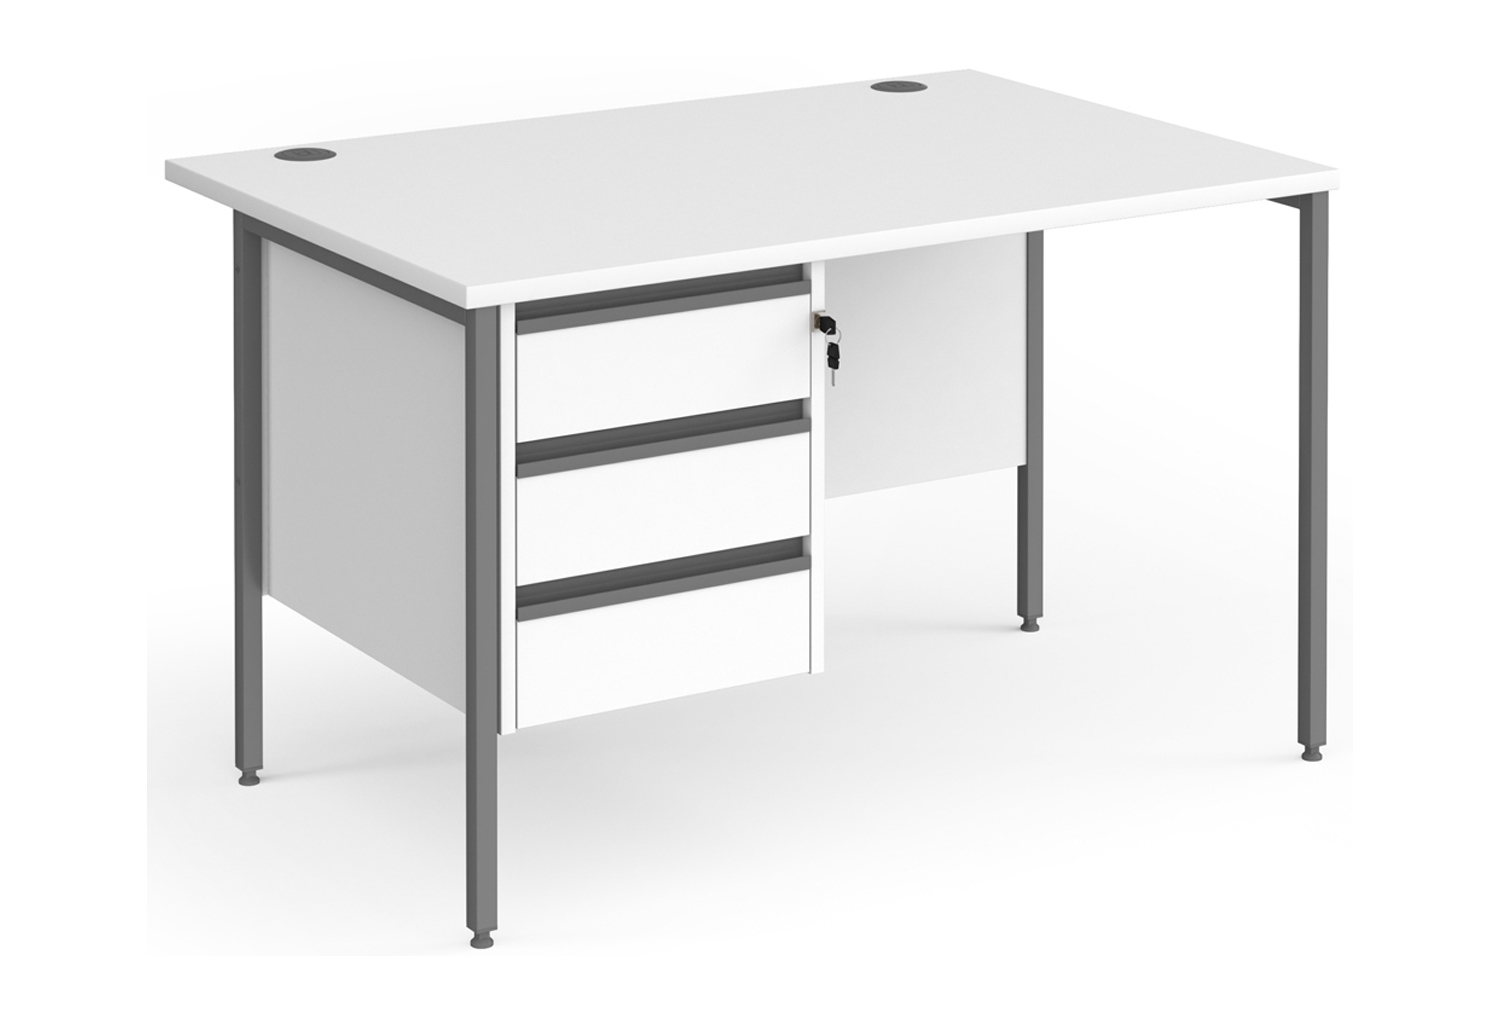 Value Line Classic+ Rectangular H-Leg Office Desk 3 Drawers (Graphite Leg), 120wx80dx73h (cm), White, Express Delivery